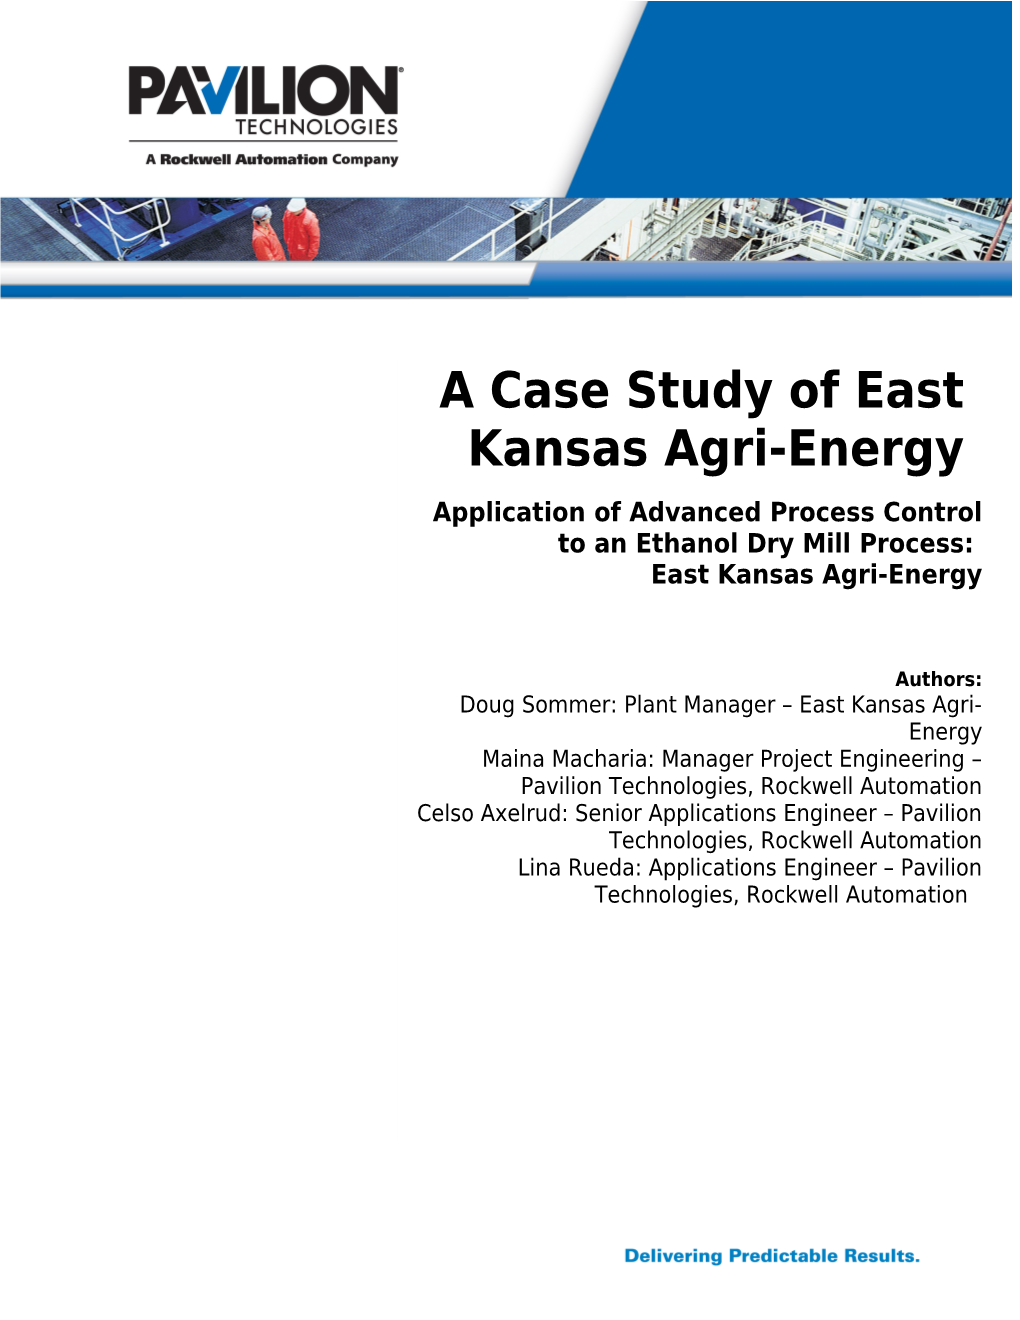 A Case Study of East Kansas Agri-Energy